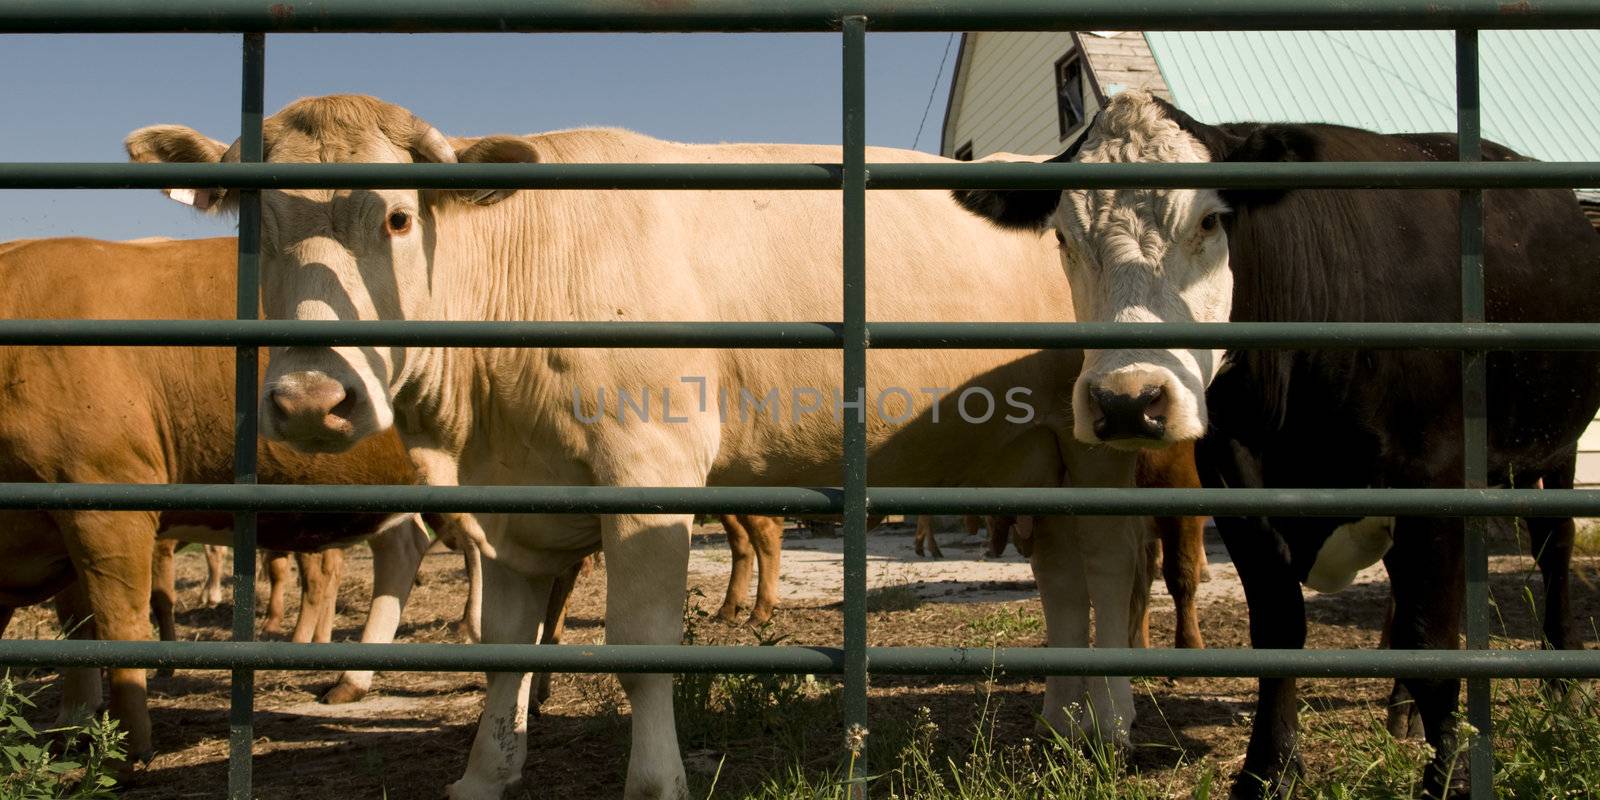 Cows Behind Bars by Gordo25